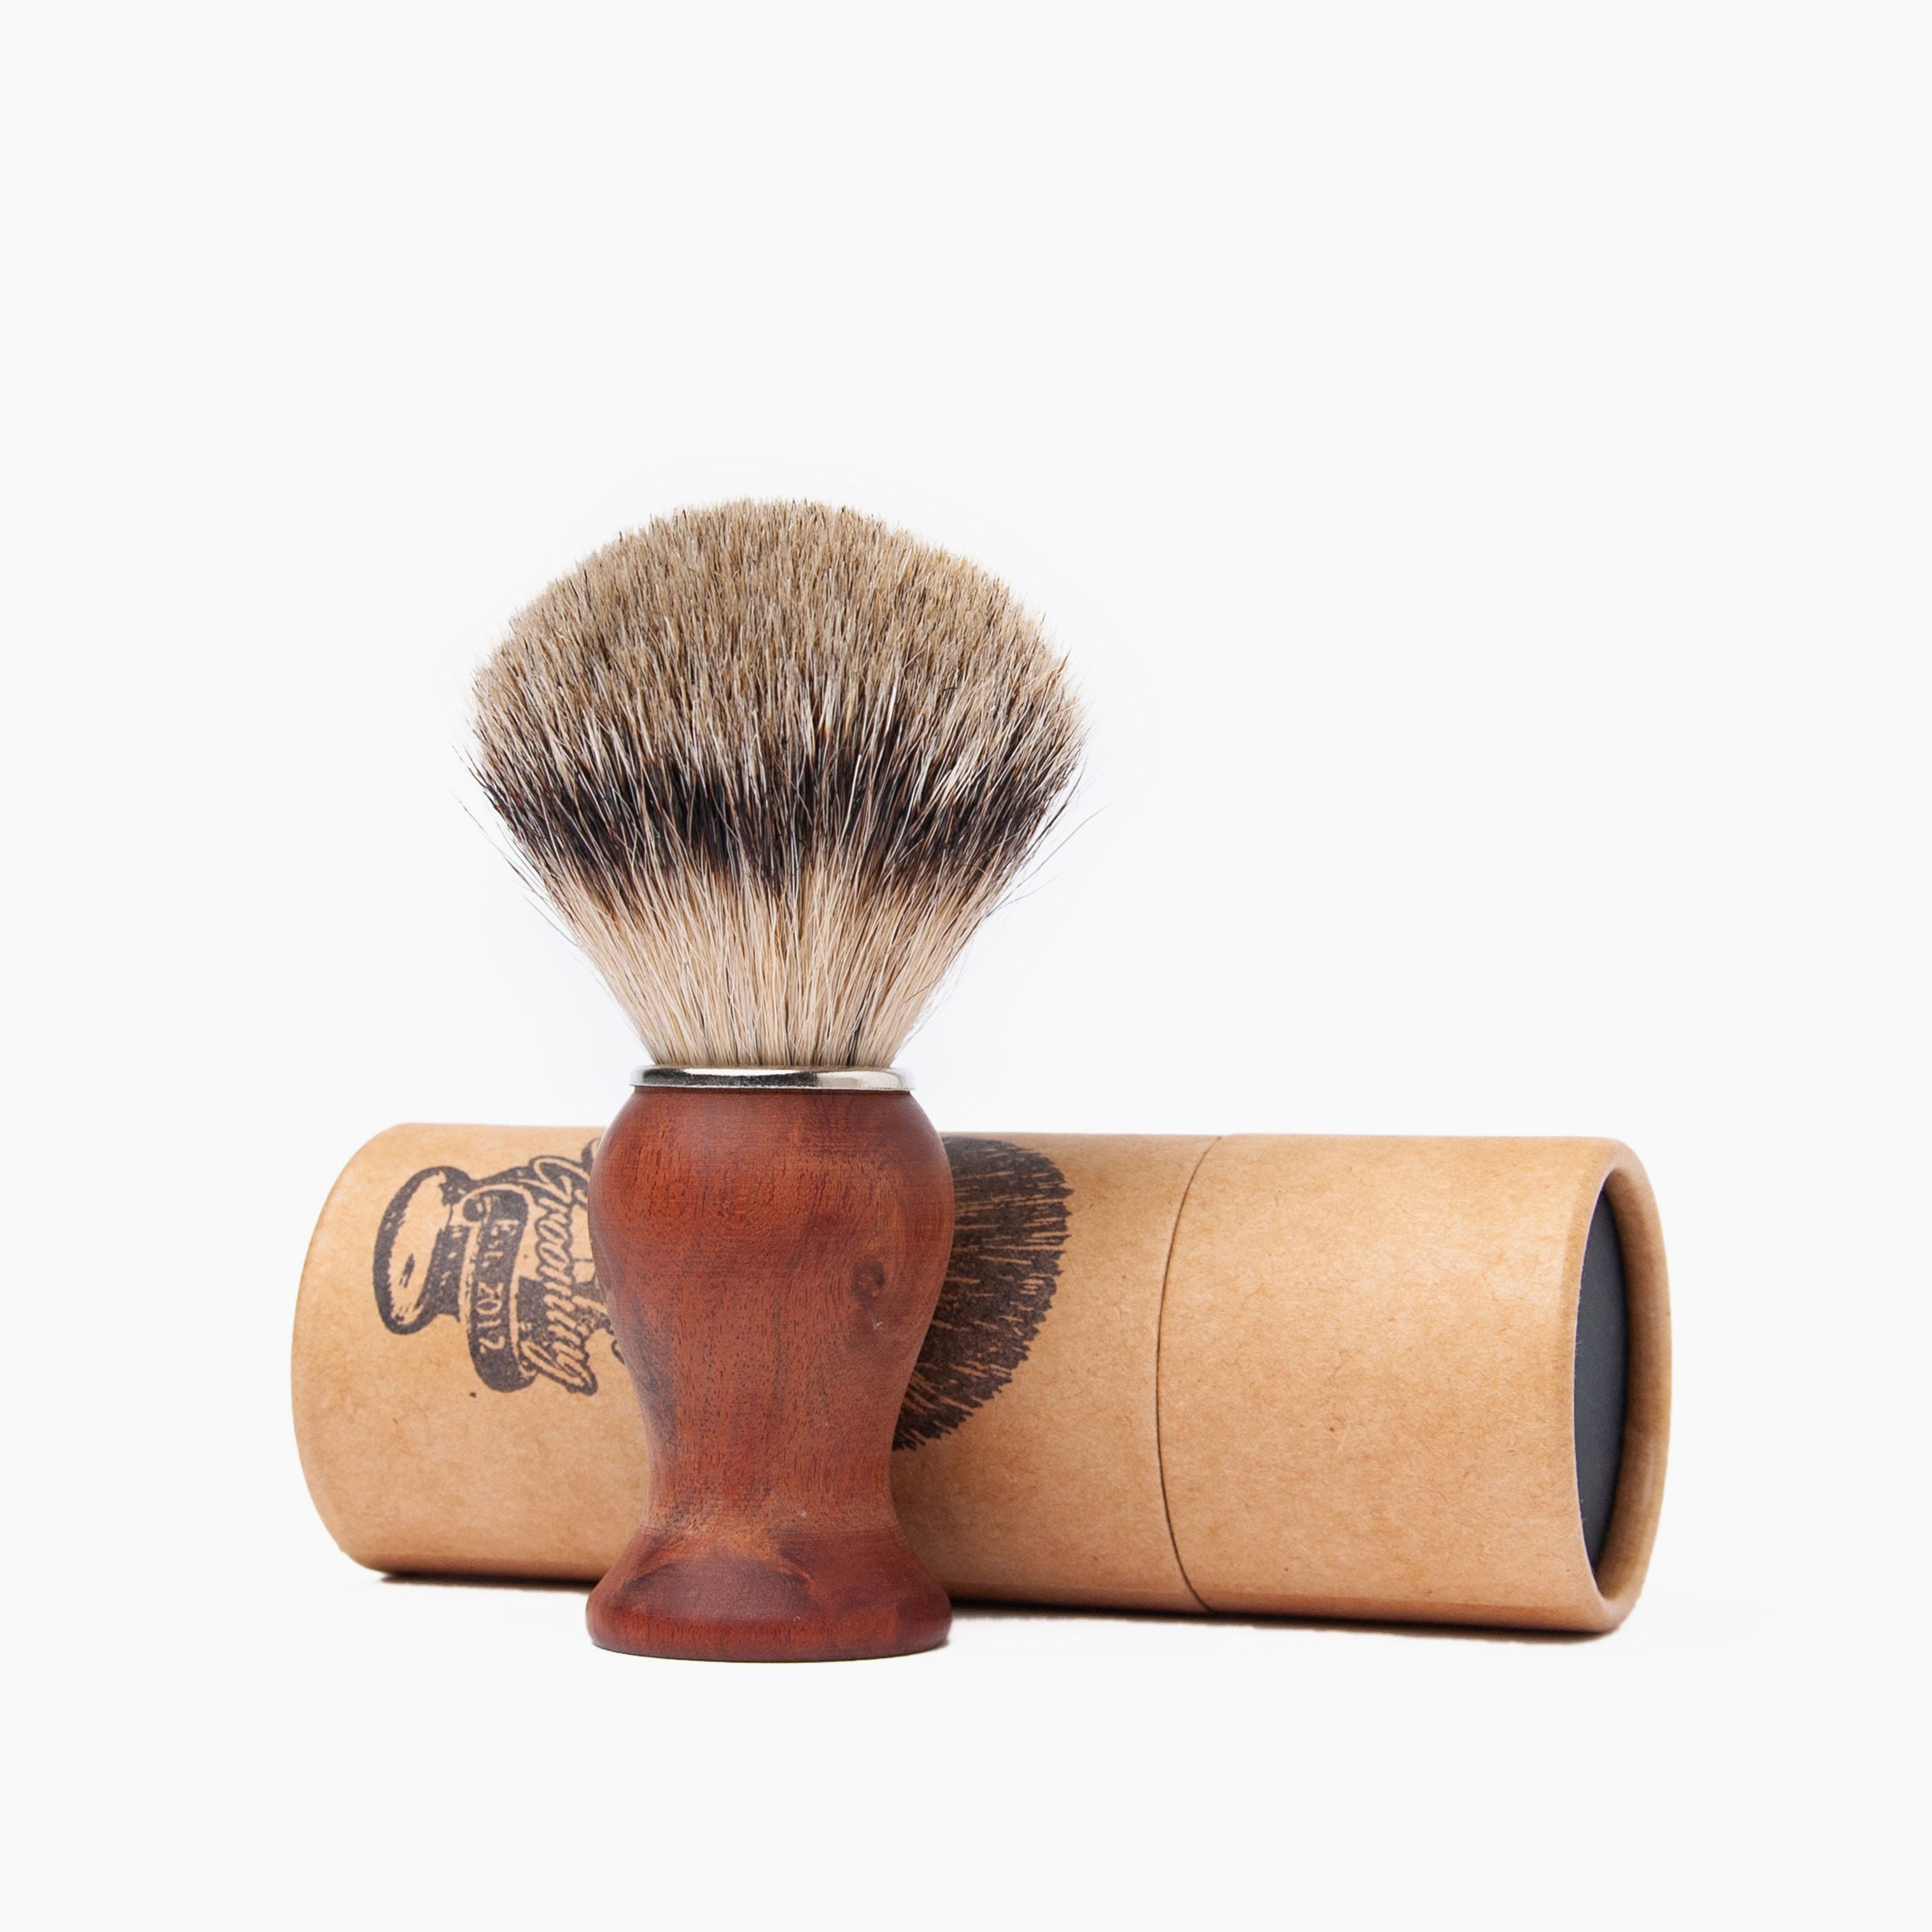 Rosewood shaving brush